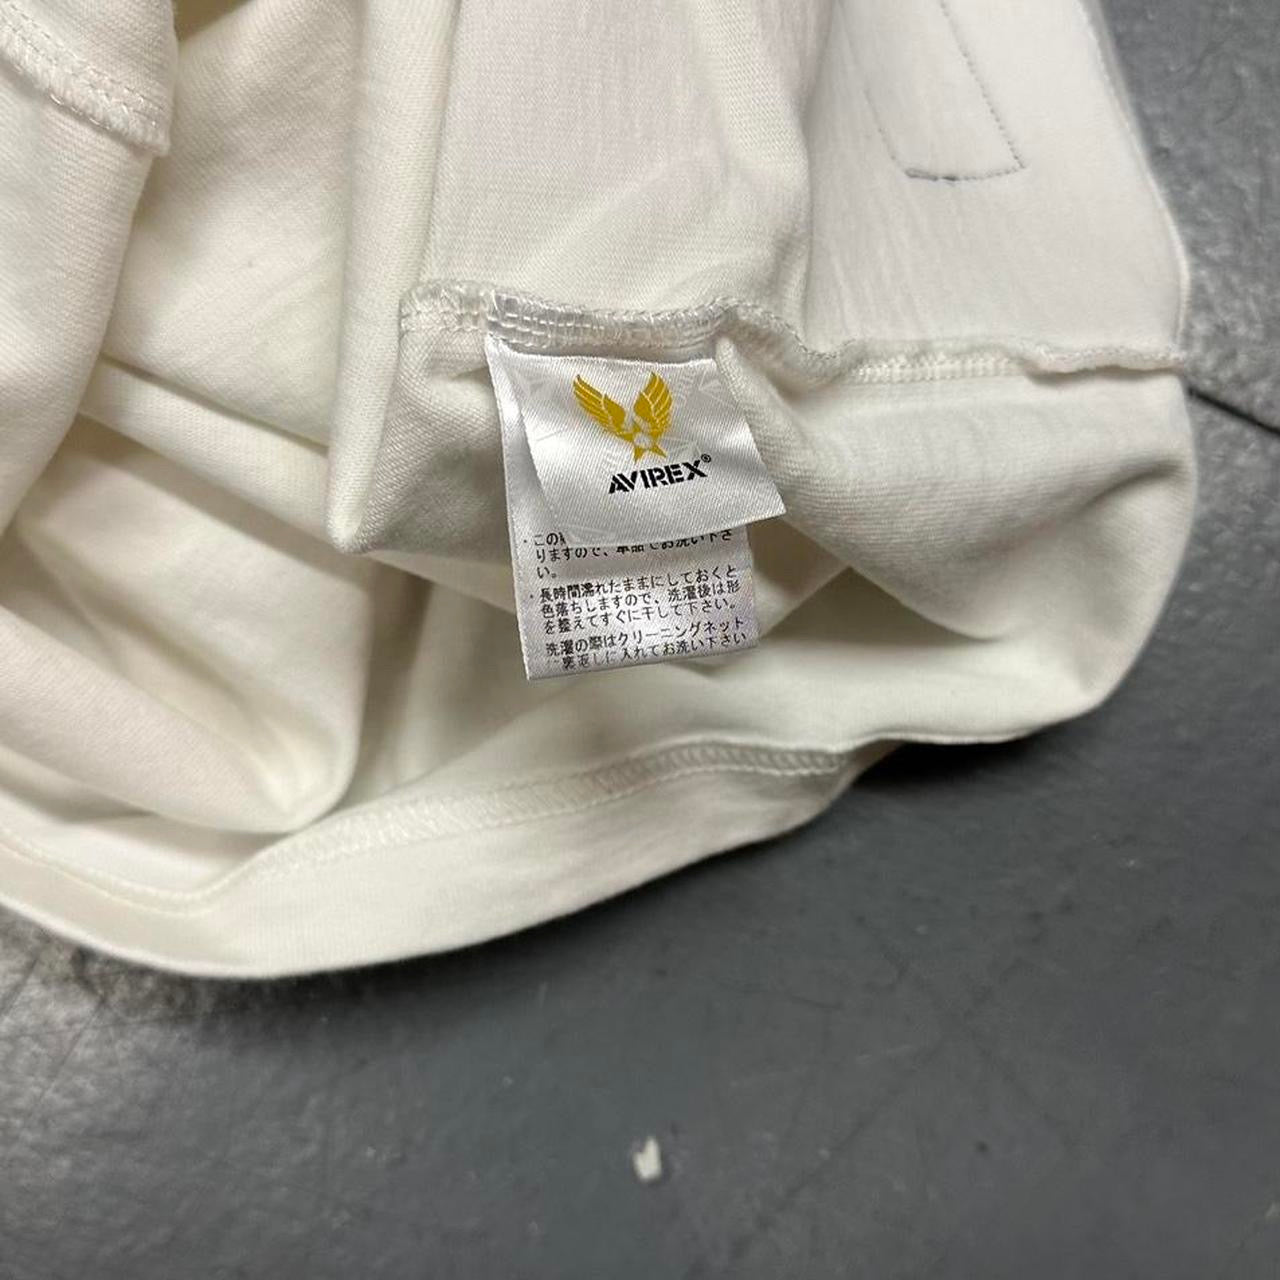 Avirex Star T-Shirt In White ( Wmns S )